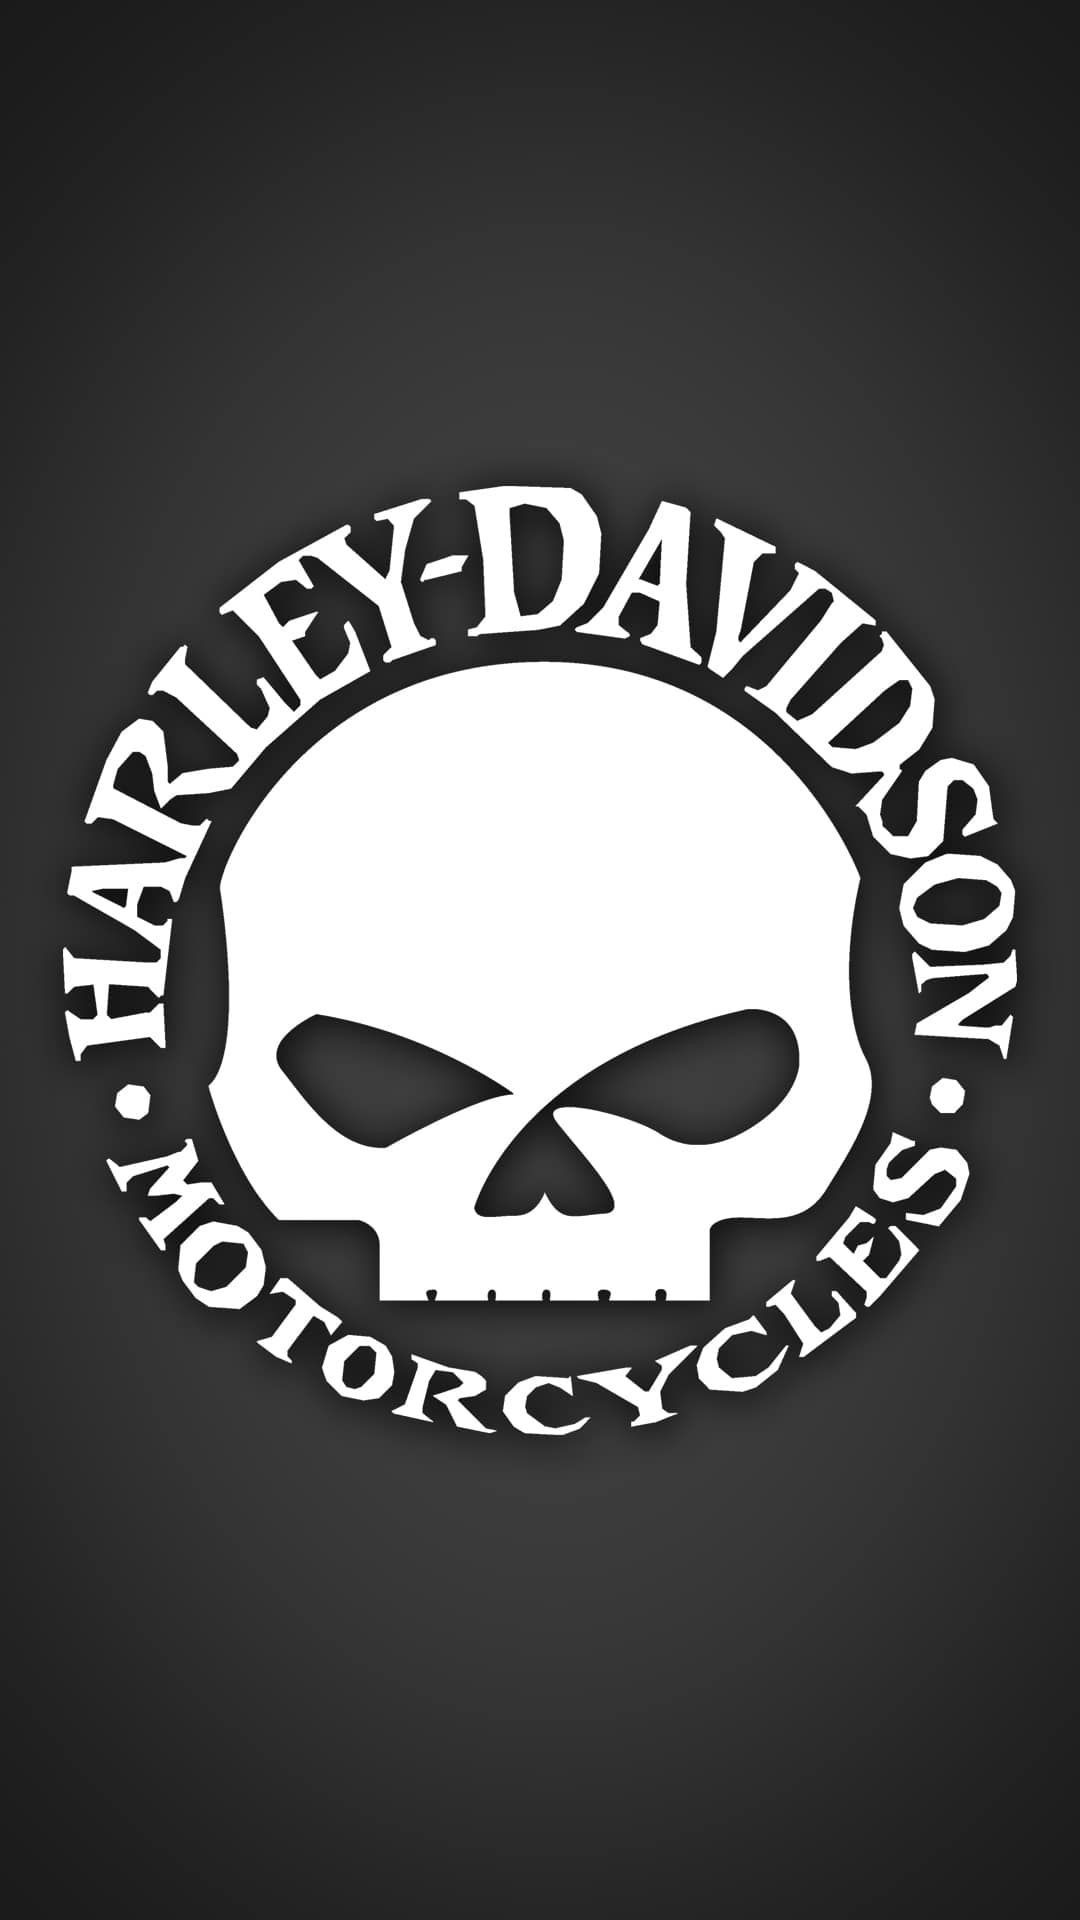 Harley Davidson Iphone Wallpapers 4k Hd Harley Davidson Iphone Backgrounds On Wallpaperbat